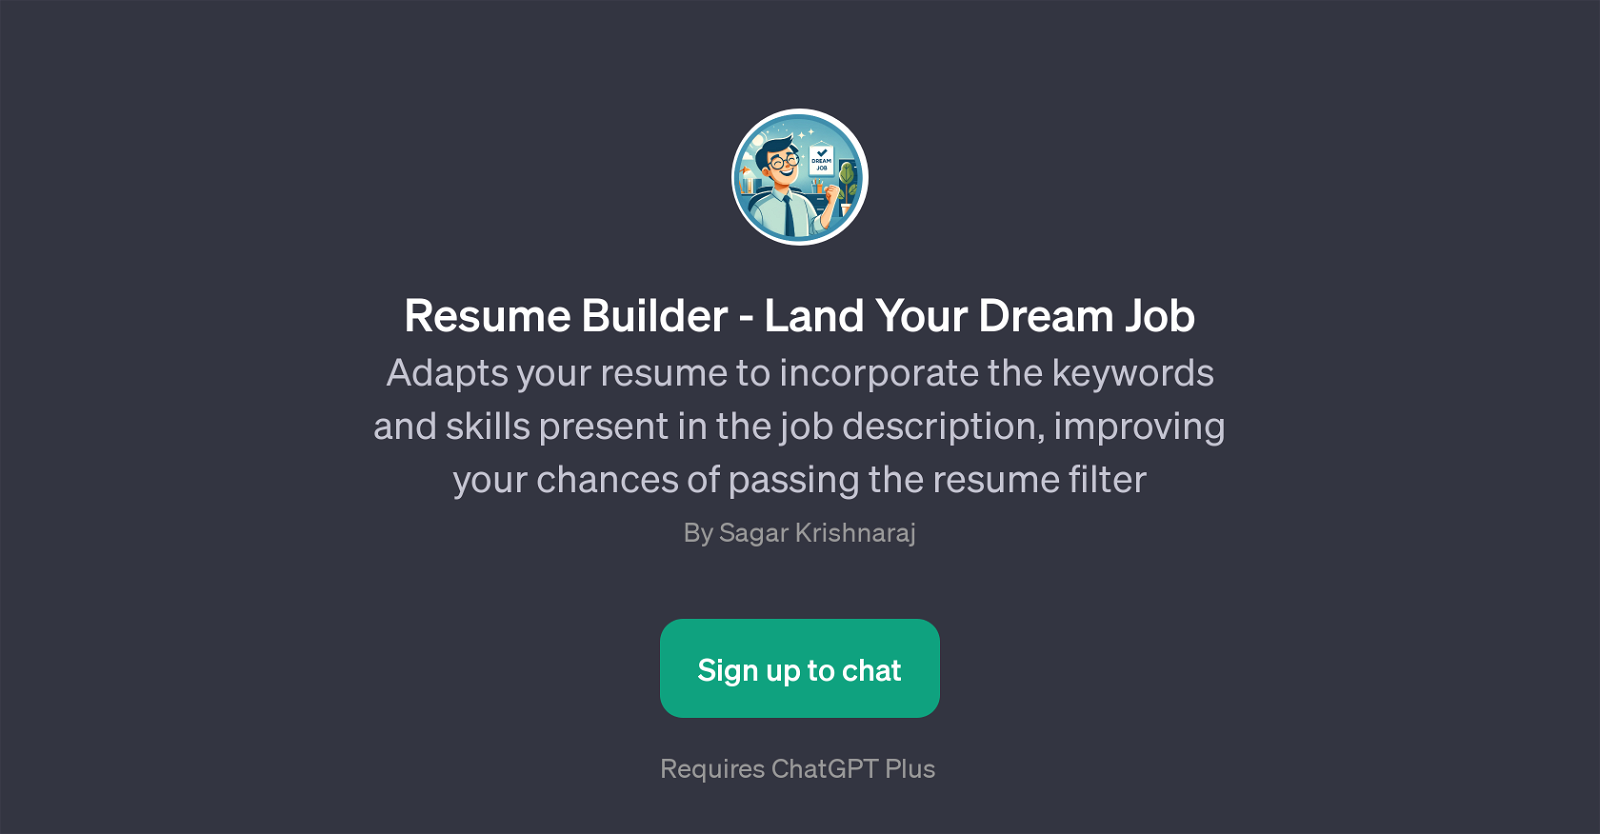 Resume Builder - Land Your Dream Job website